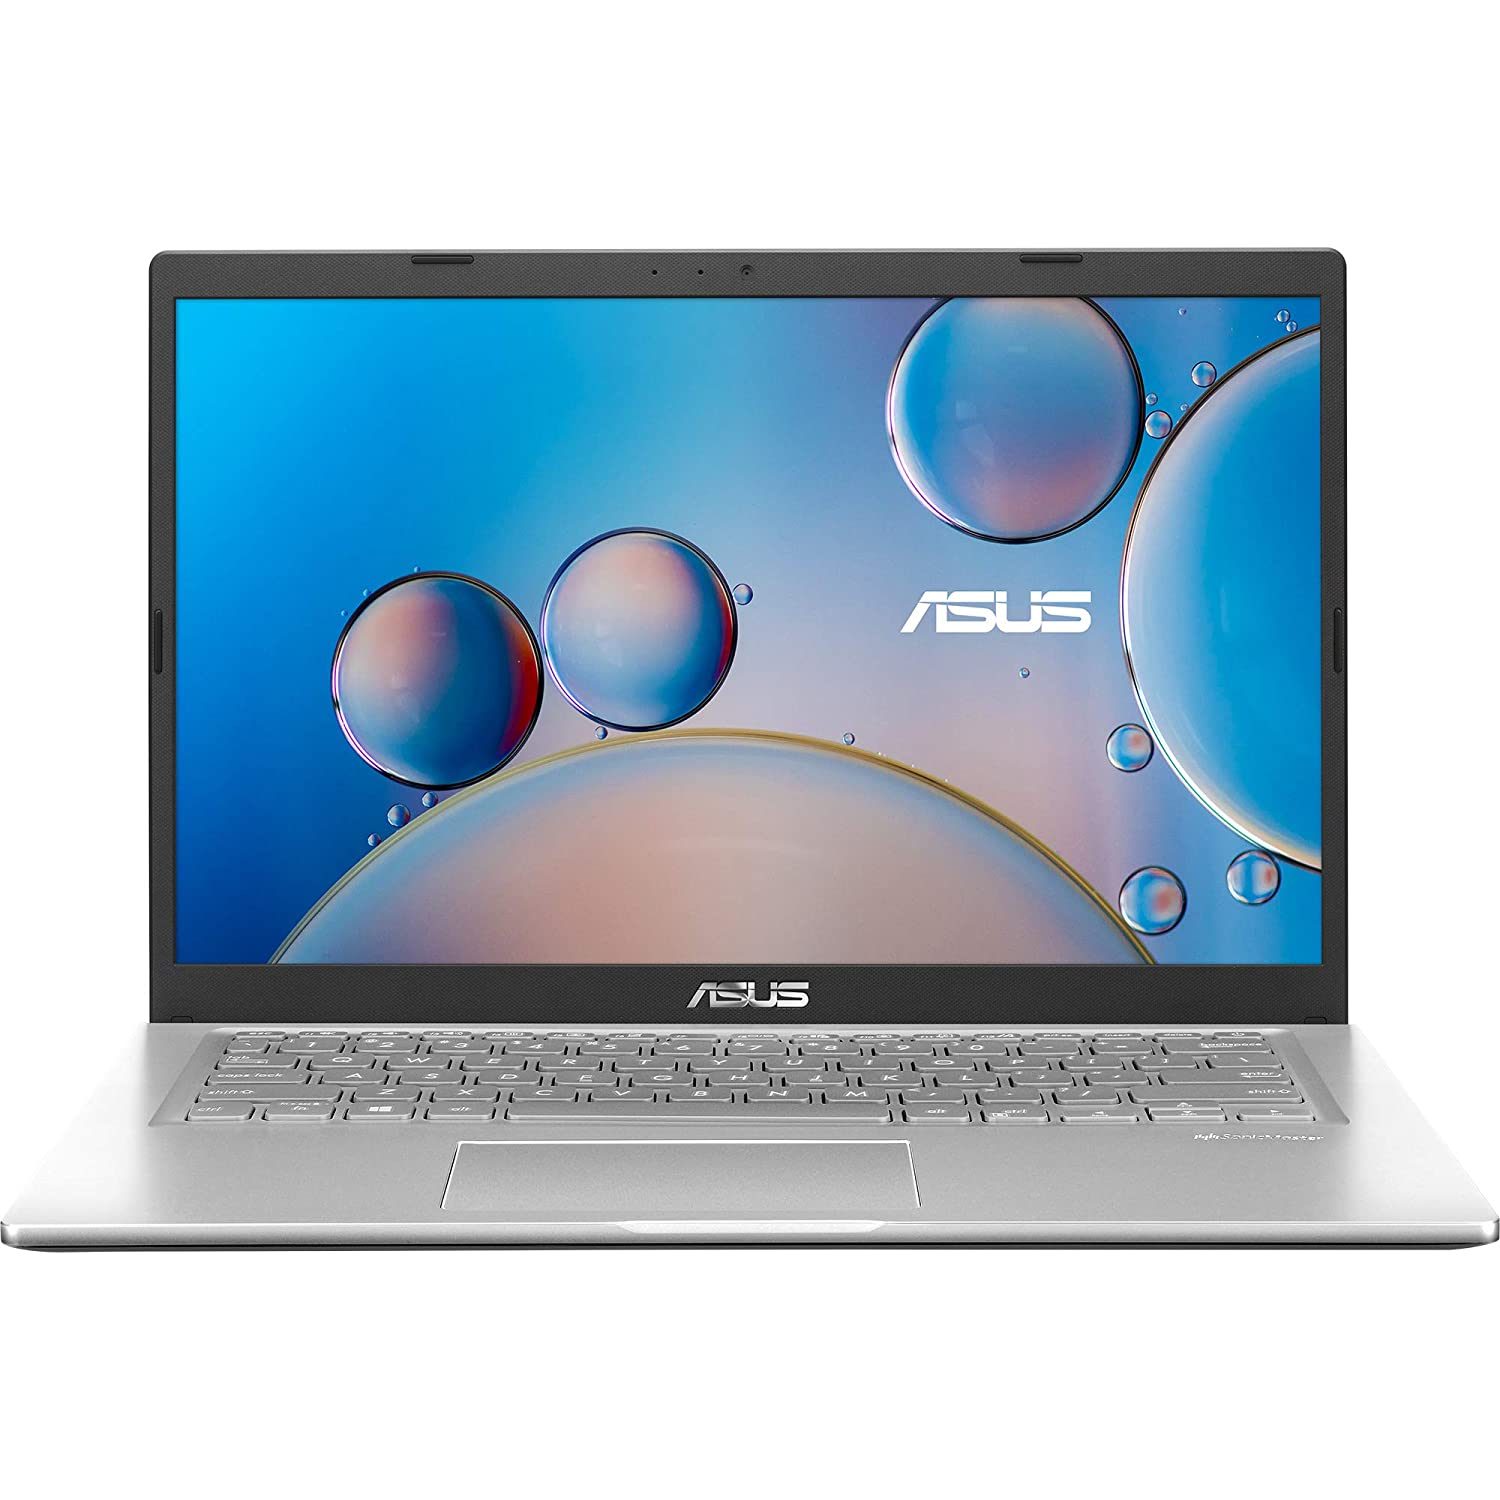 Amazon Festival Sale: Bumper Discount On ASUS VivoBook Laptop - Check Mega Discounts On MRP